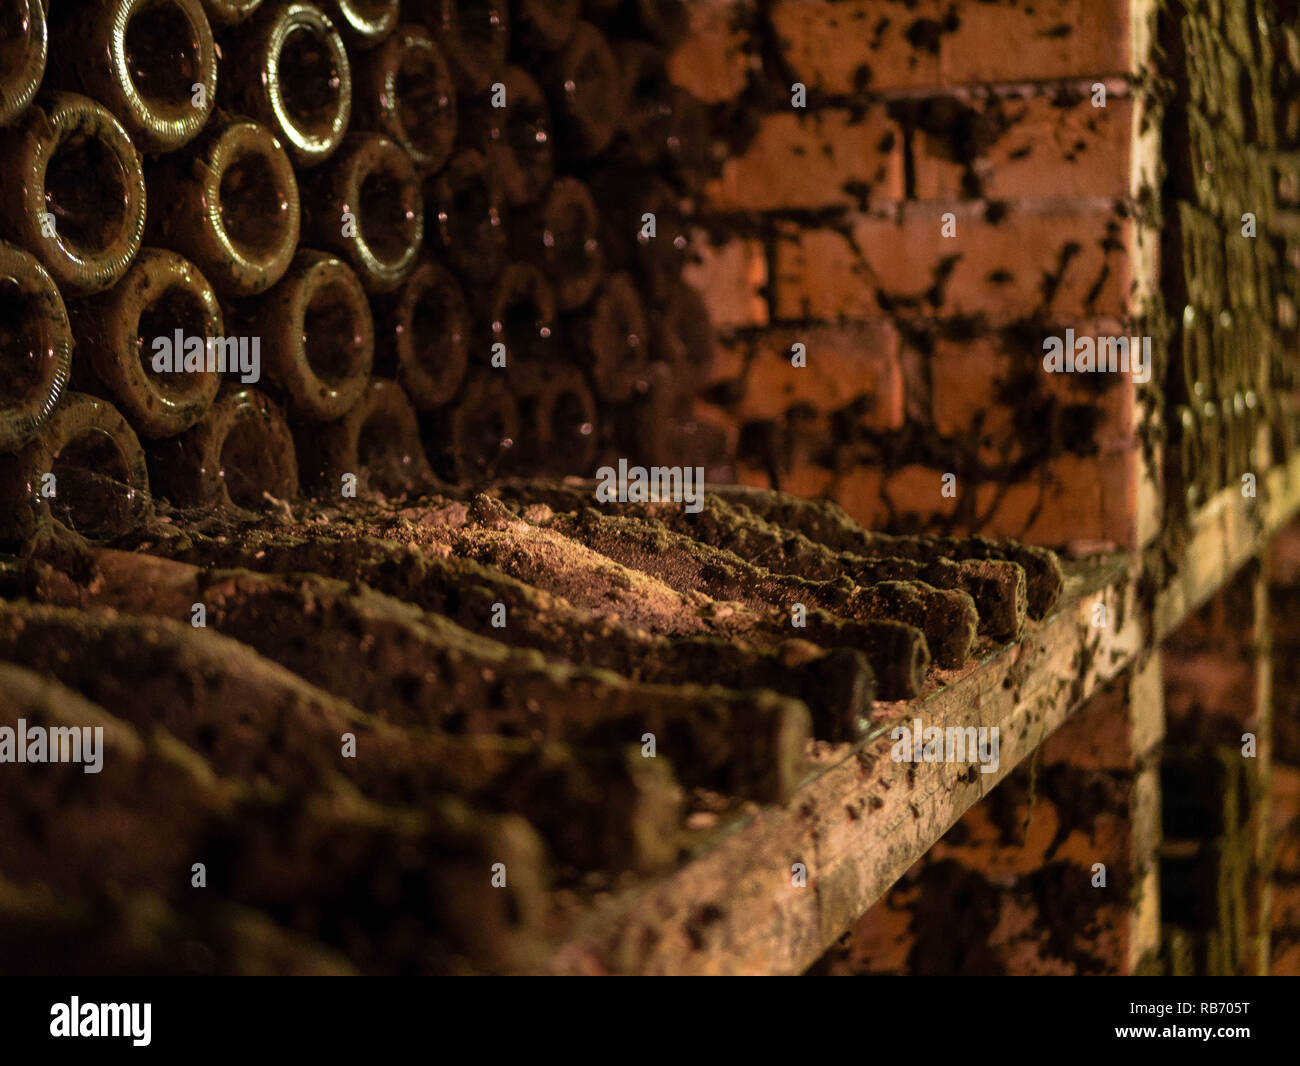 Forgotten bottles in an ancient wine cellar Stock Photo